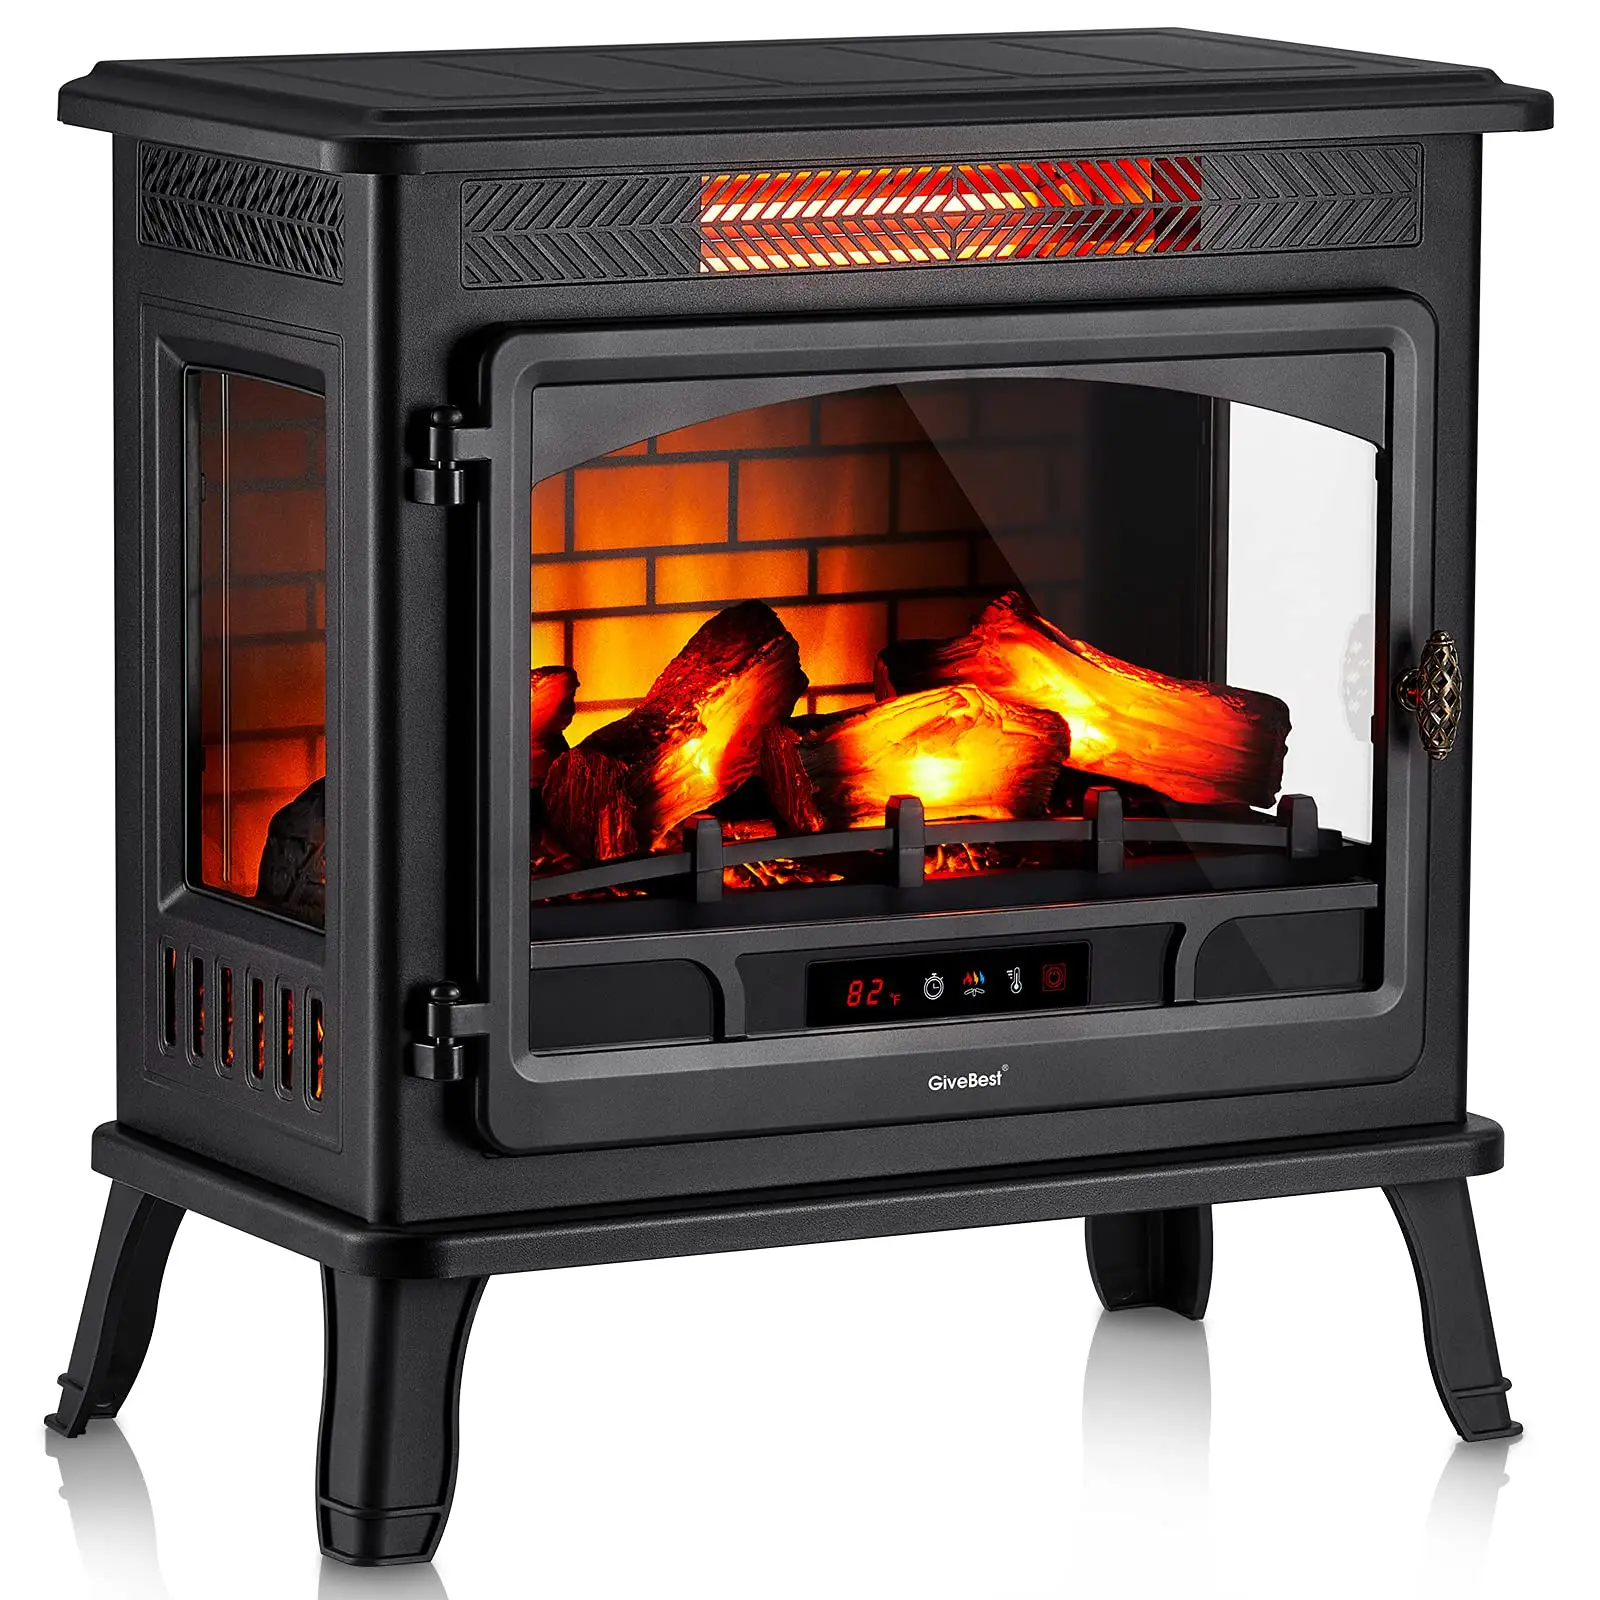 Kndko 24 ''ブラック電気暖炉1500w自立型ポータブル屋内電気ストーブヒーター (3Dフレーム効果付き)